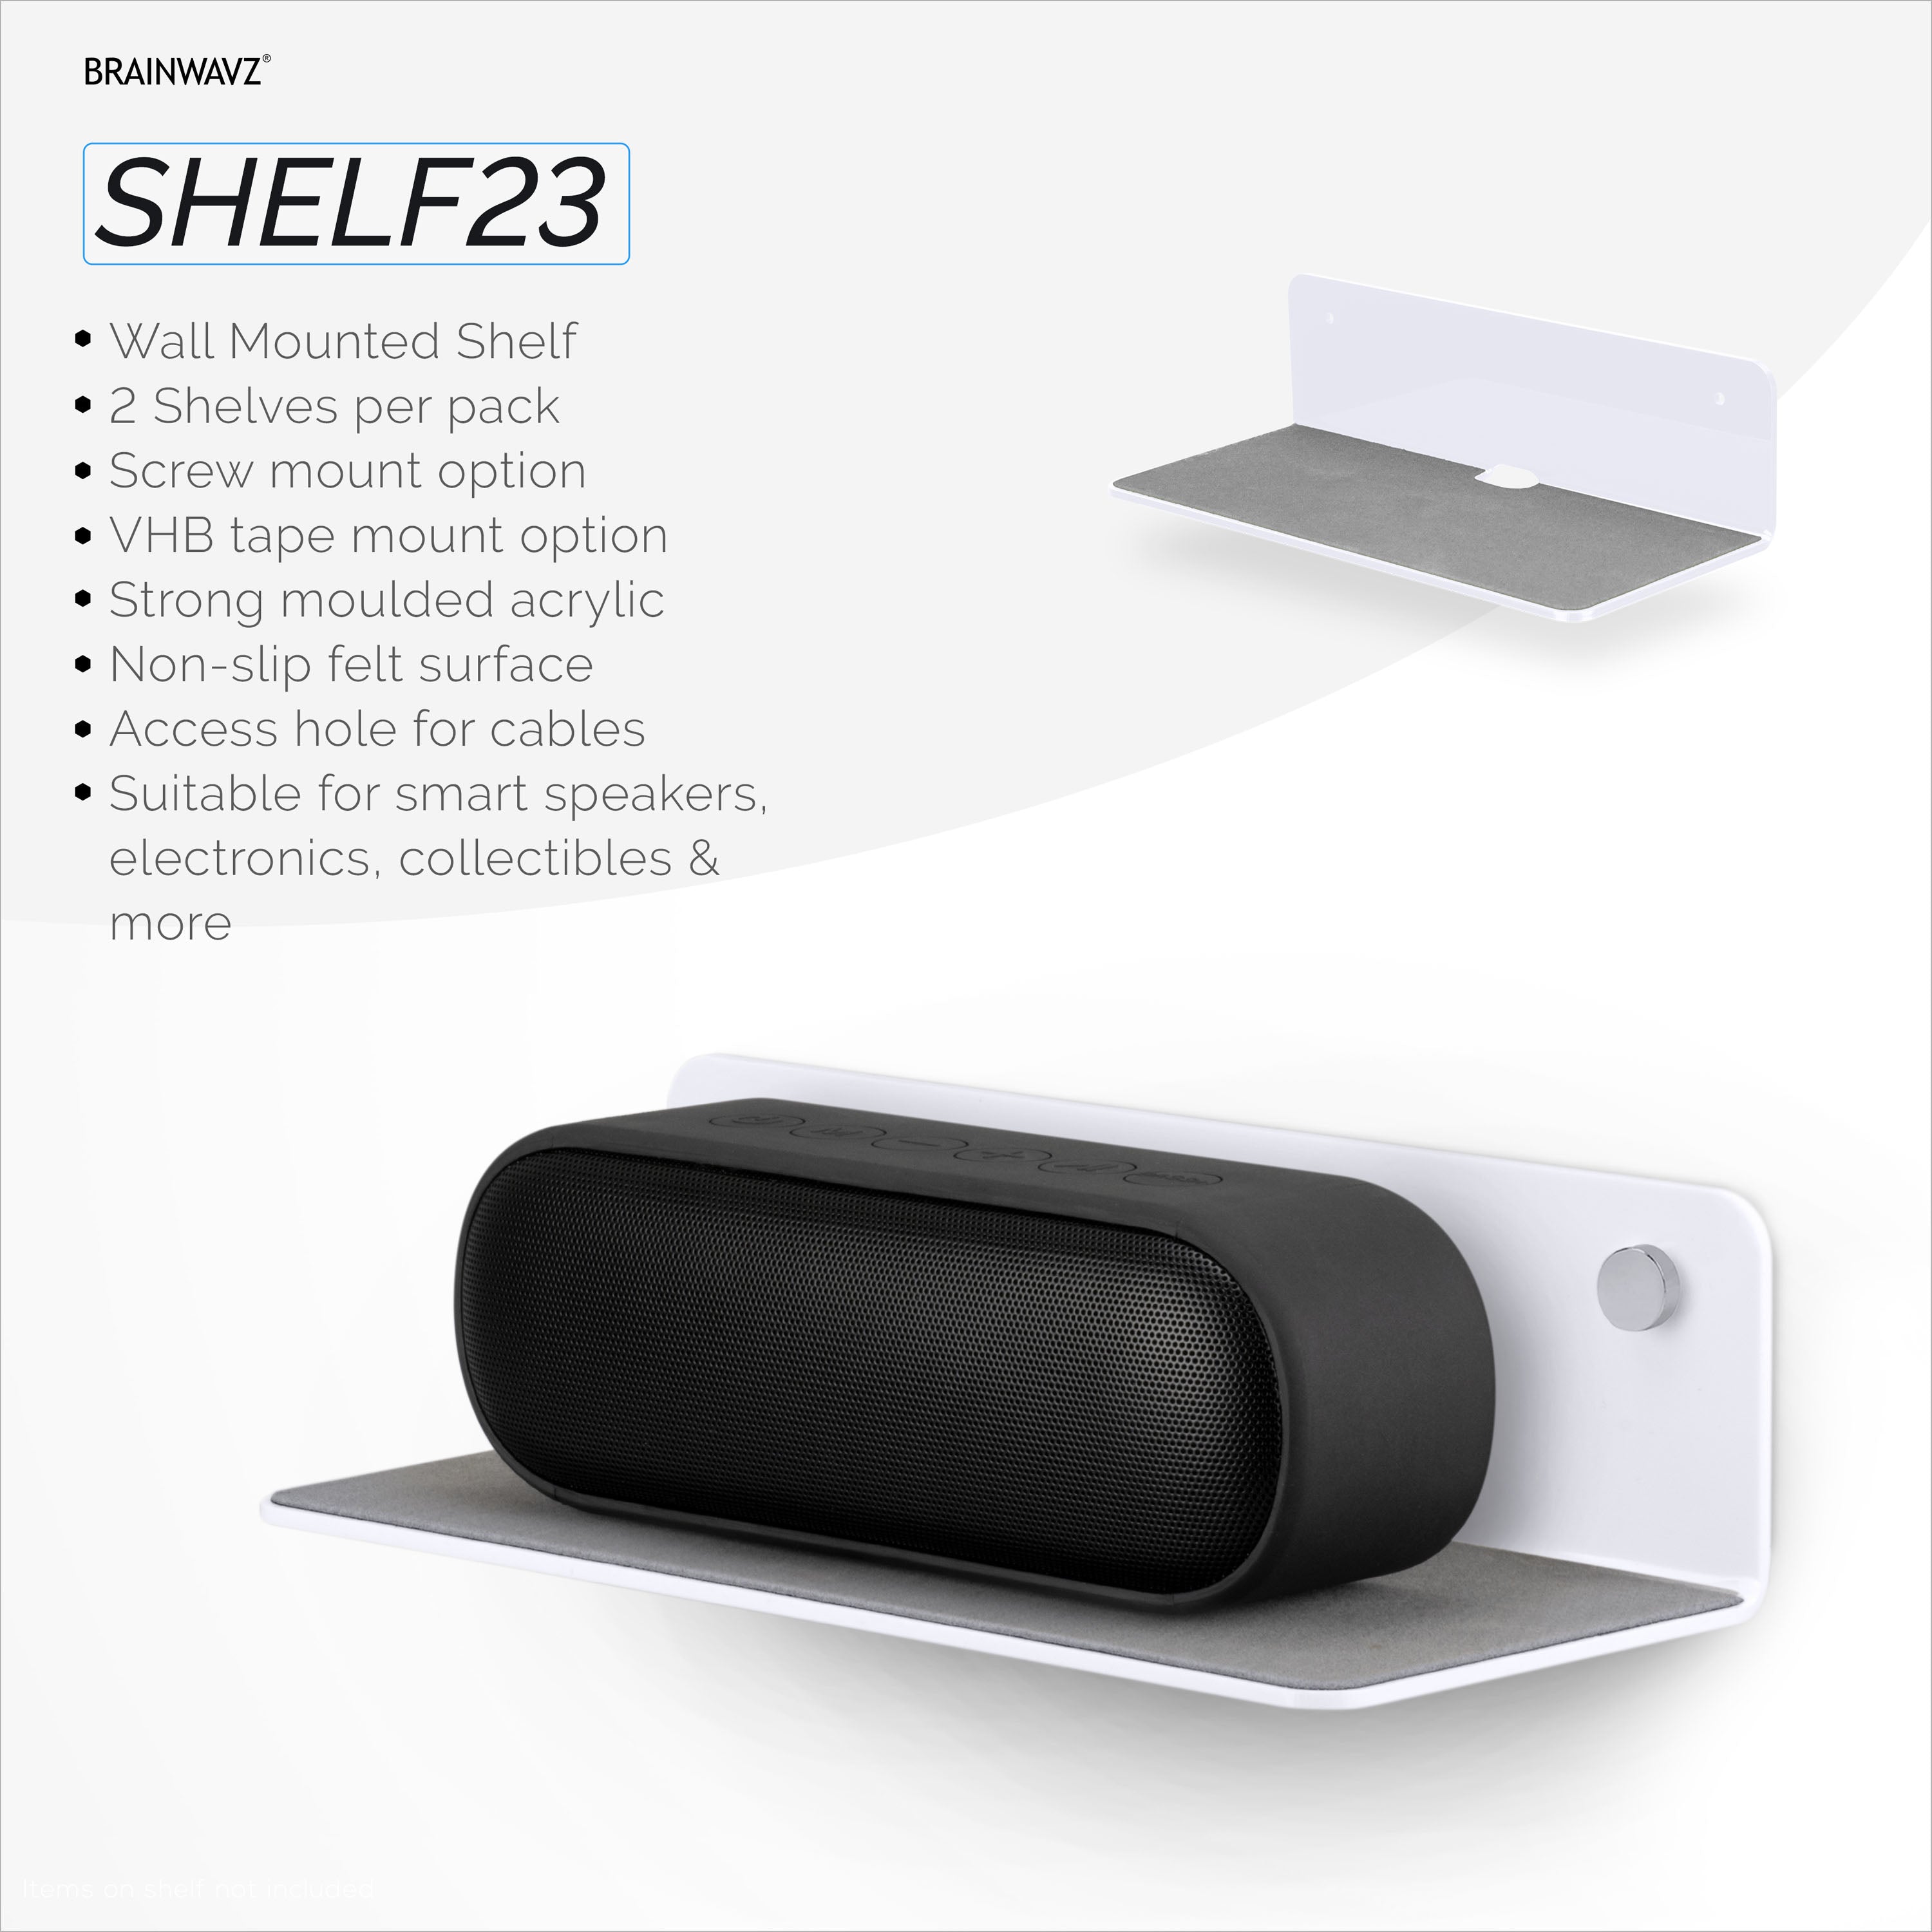 4.5 Adheasive Small Floating Shelf Wall Mount (UM160) for Speakers, Decor,  Security Cameras, Baby Monitors, Speakers, Plants & More (114m/4.5” x  112mm/4.4”) - Brainwavz Audio